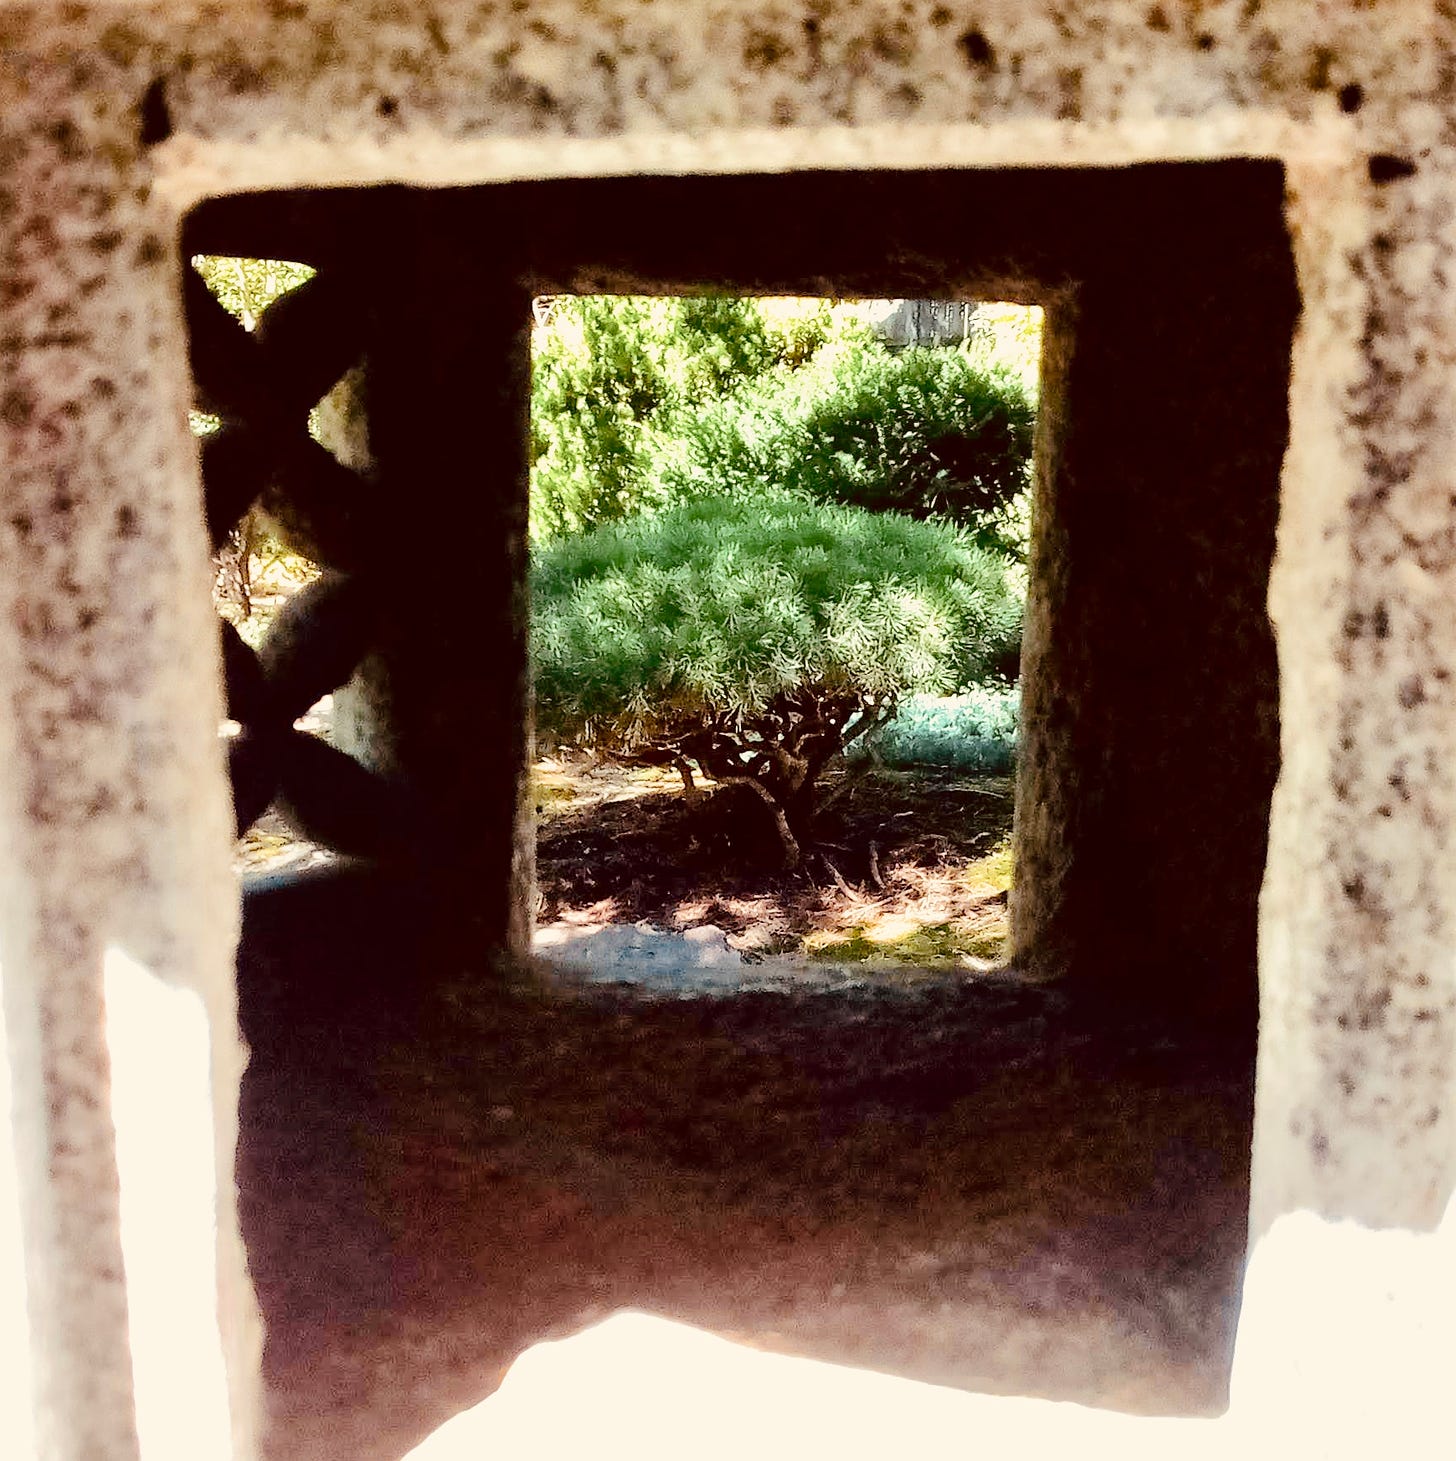 Pine shrub viewed through a window